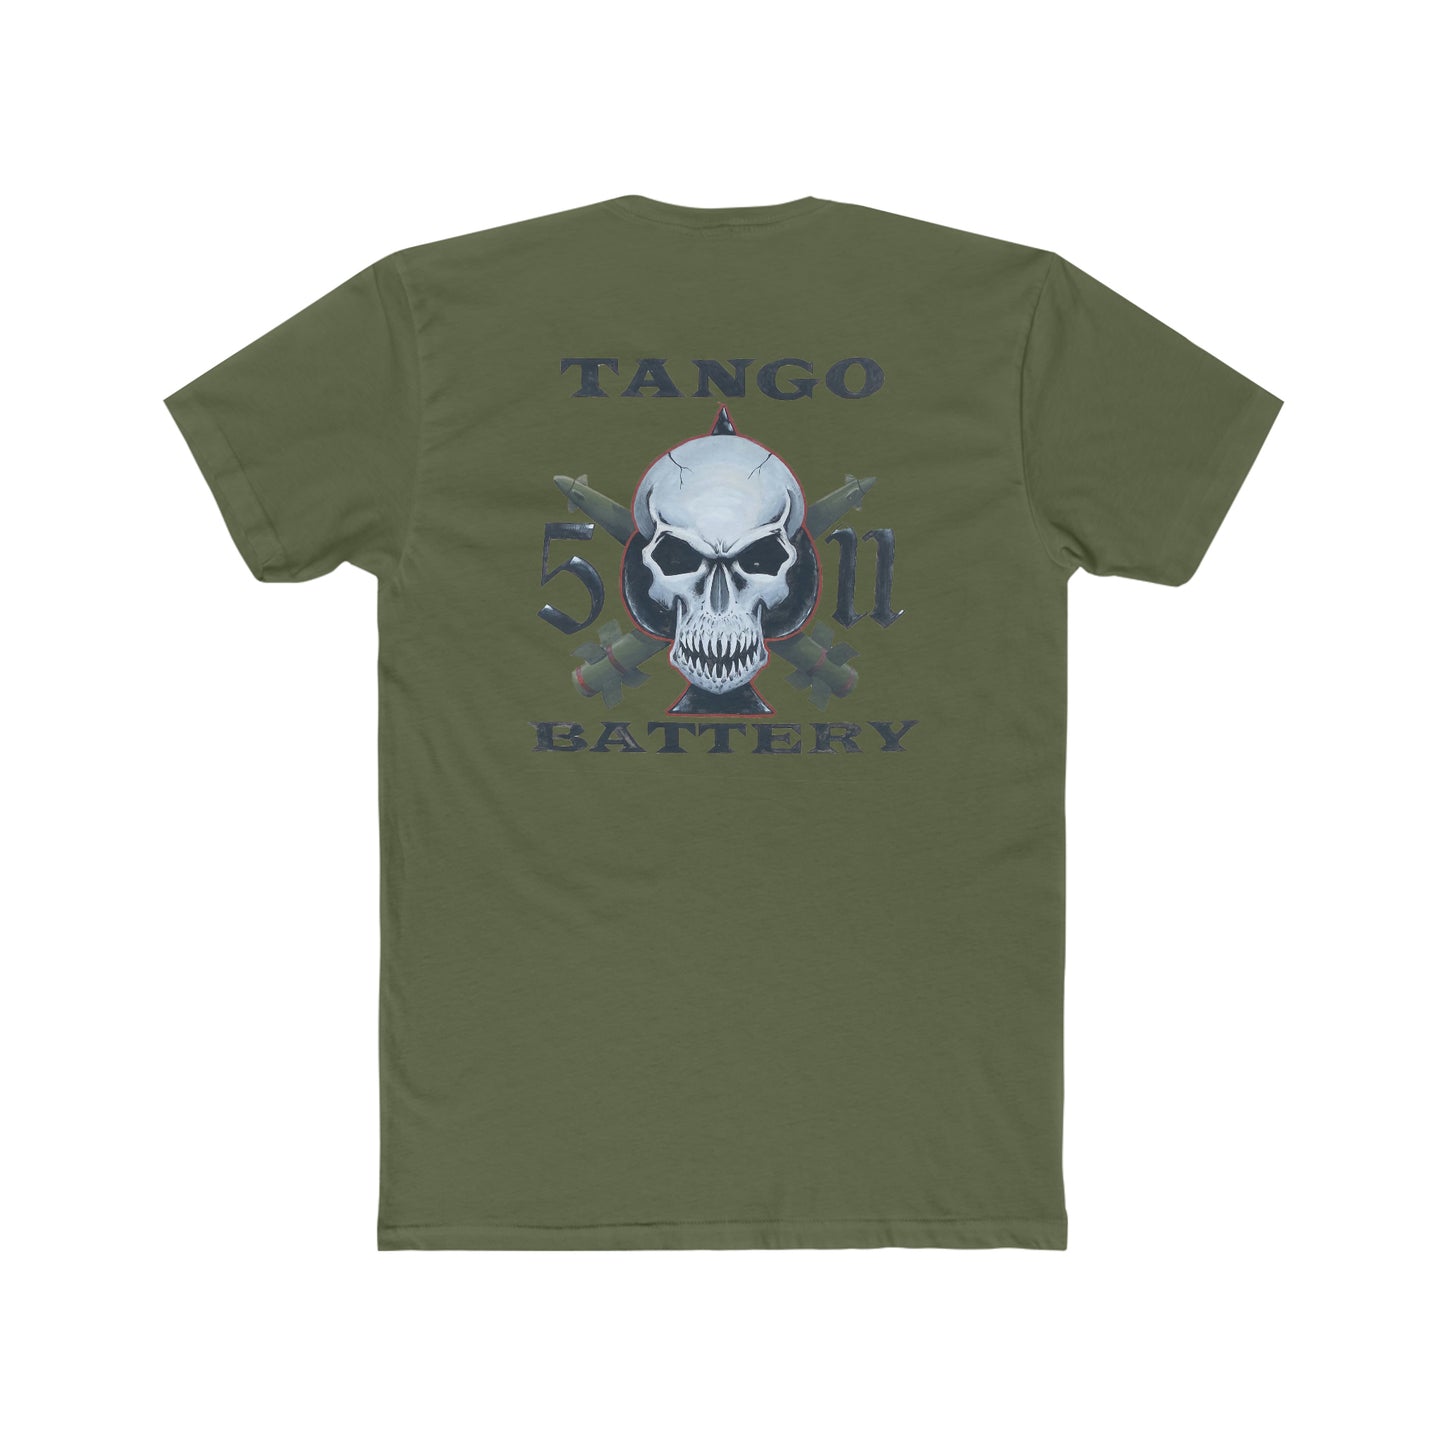 Tango Battery 5th Battalion 11th Marine Tee